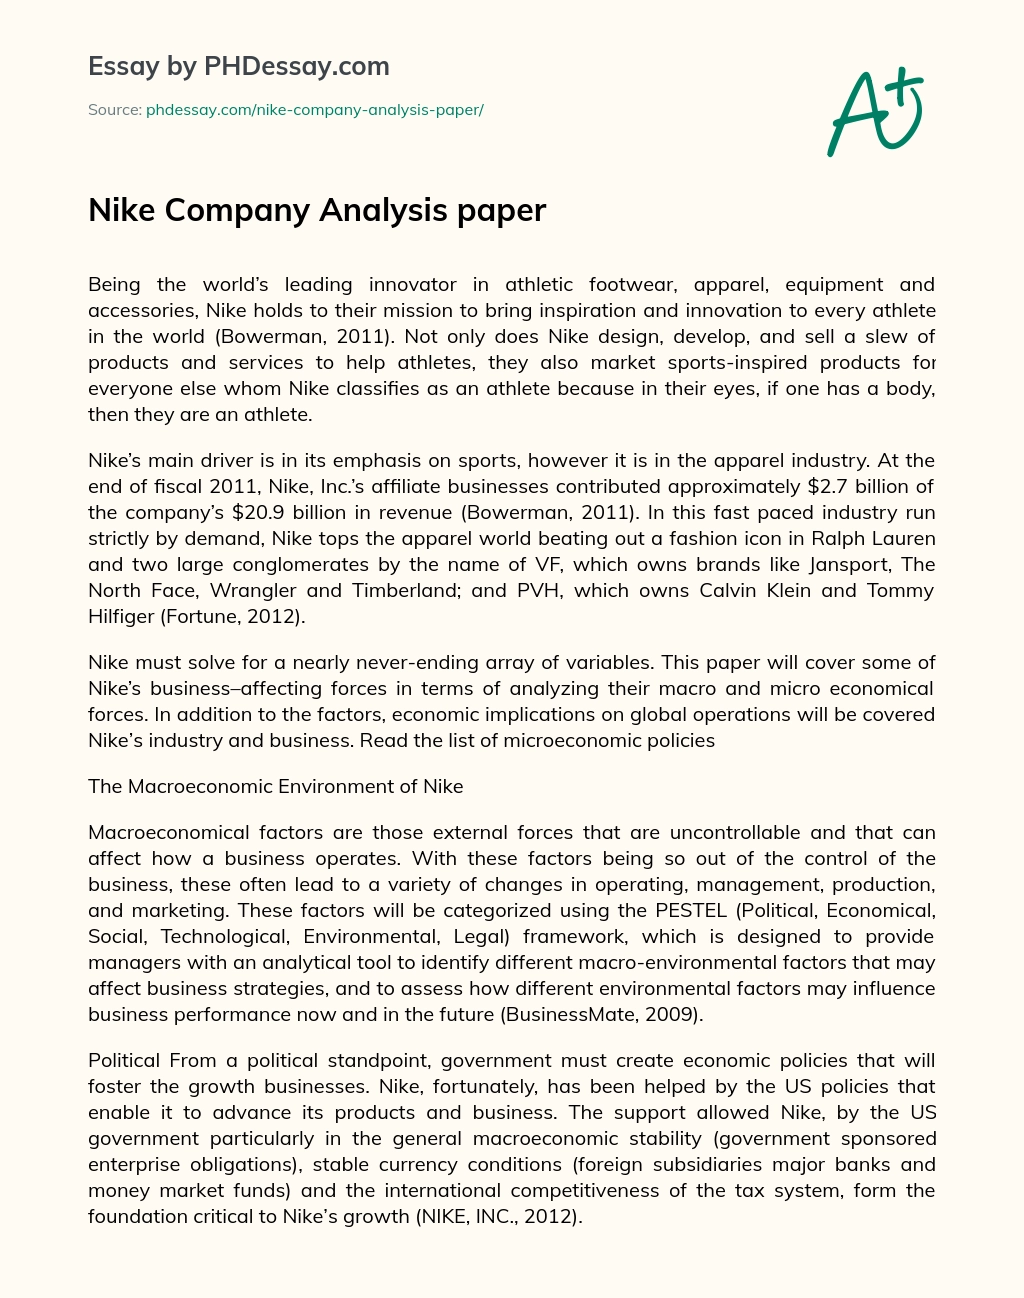 Nike Company Analysis Paper essay